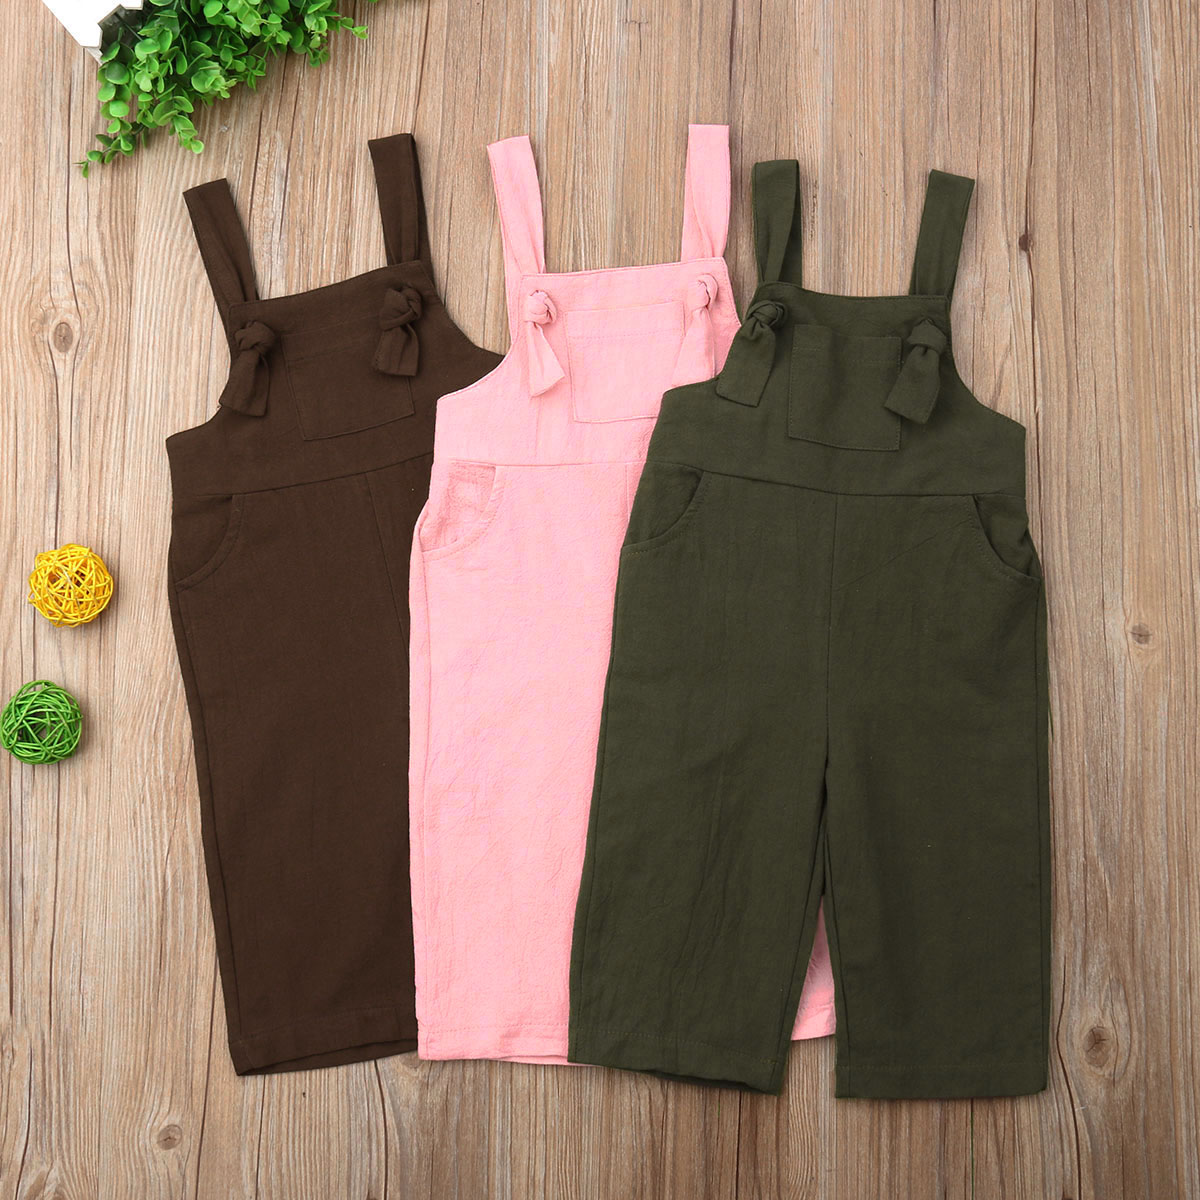 Toddler kid baby piger sommer overalls knude strappy ensfarvet linnebukser lange bukser tøj 1-6t